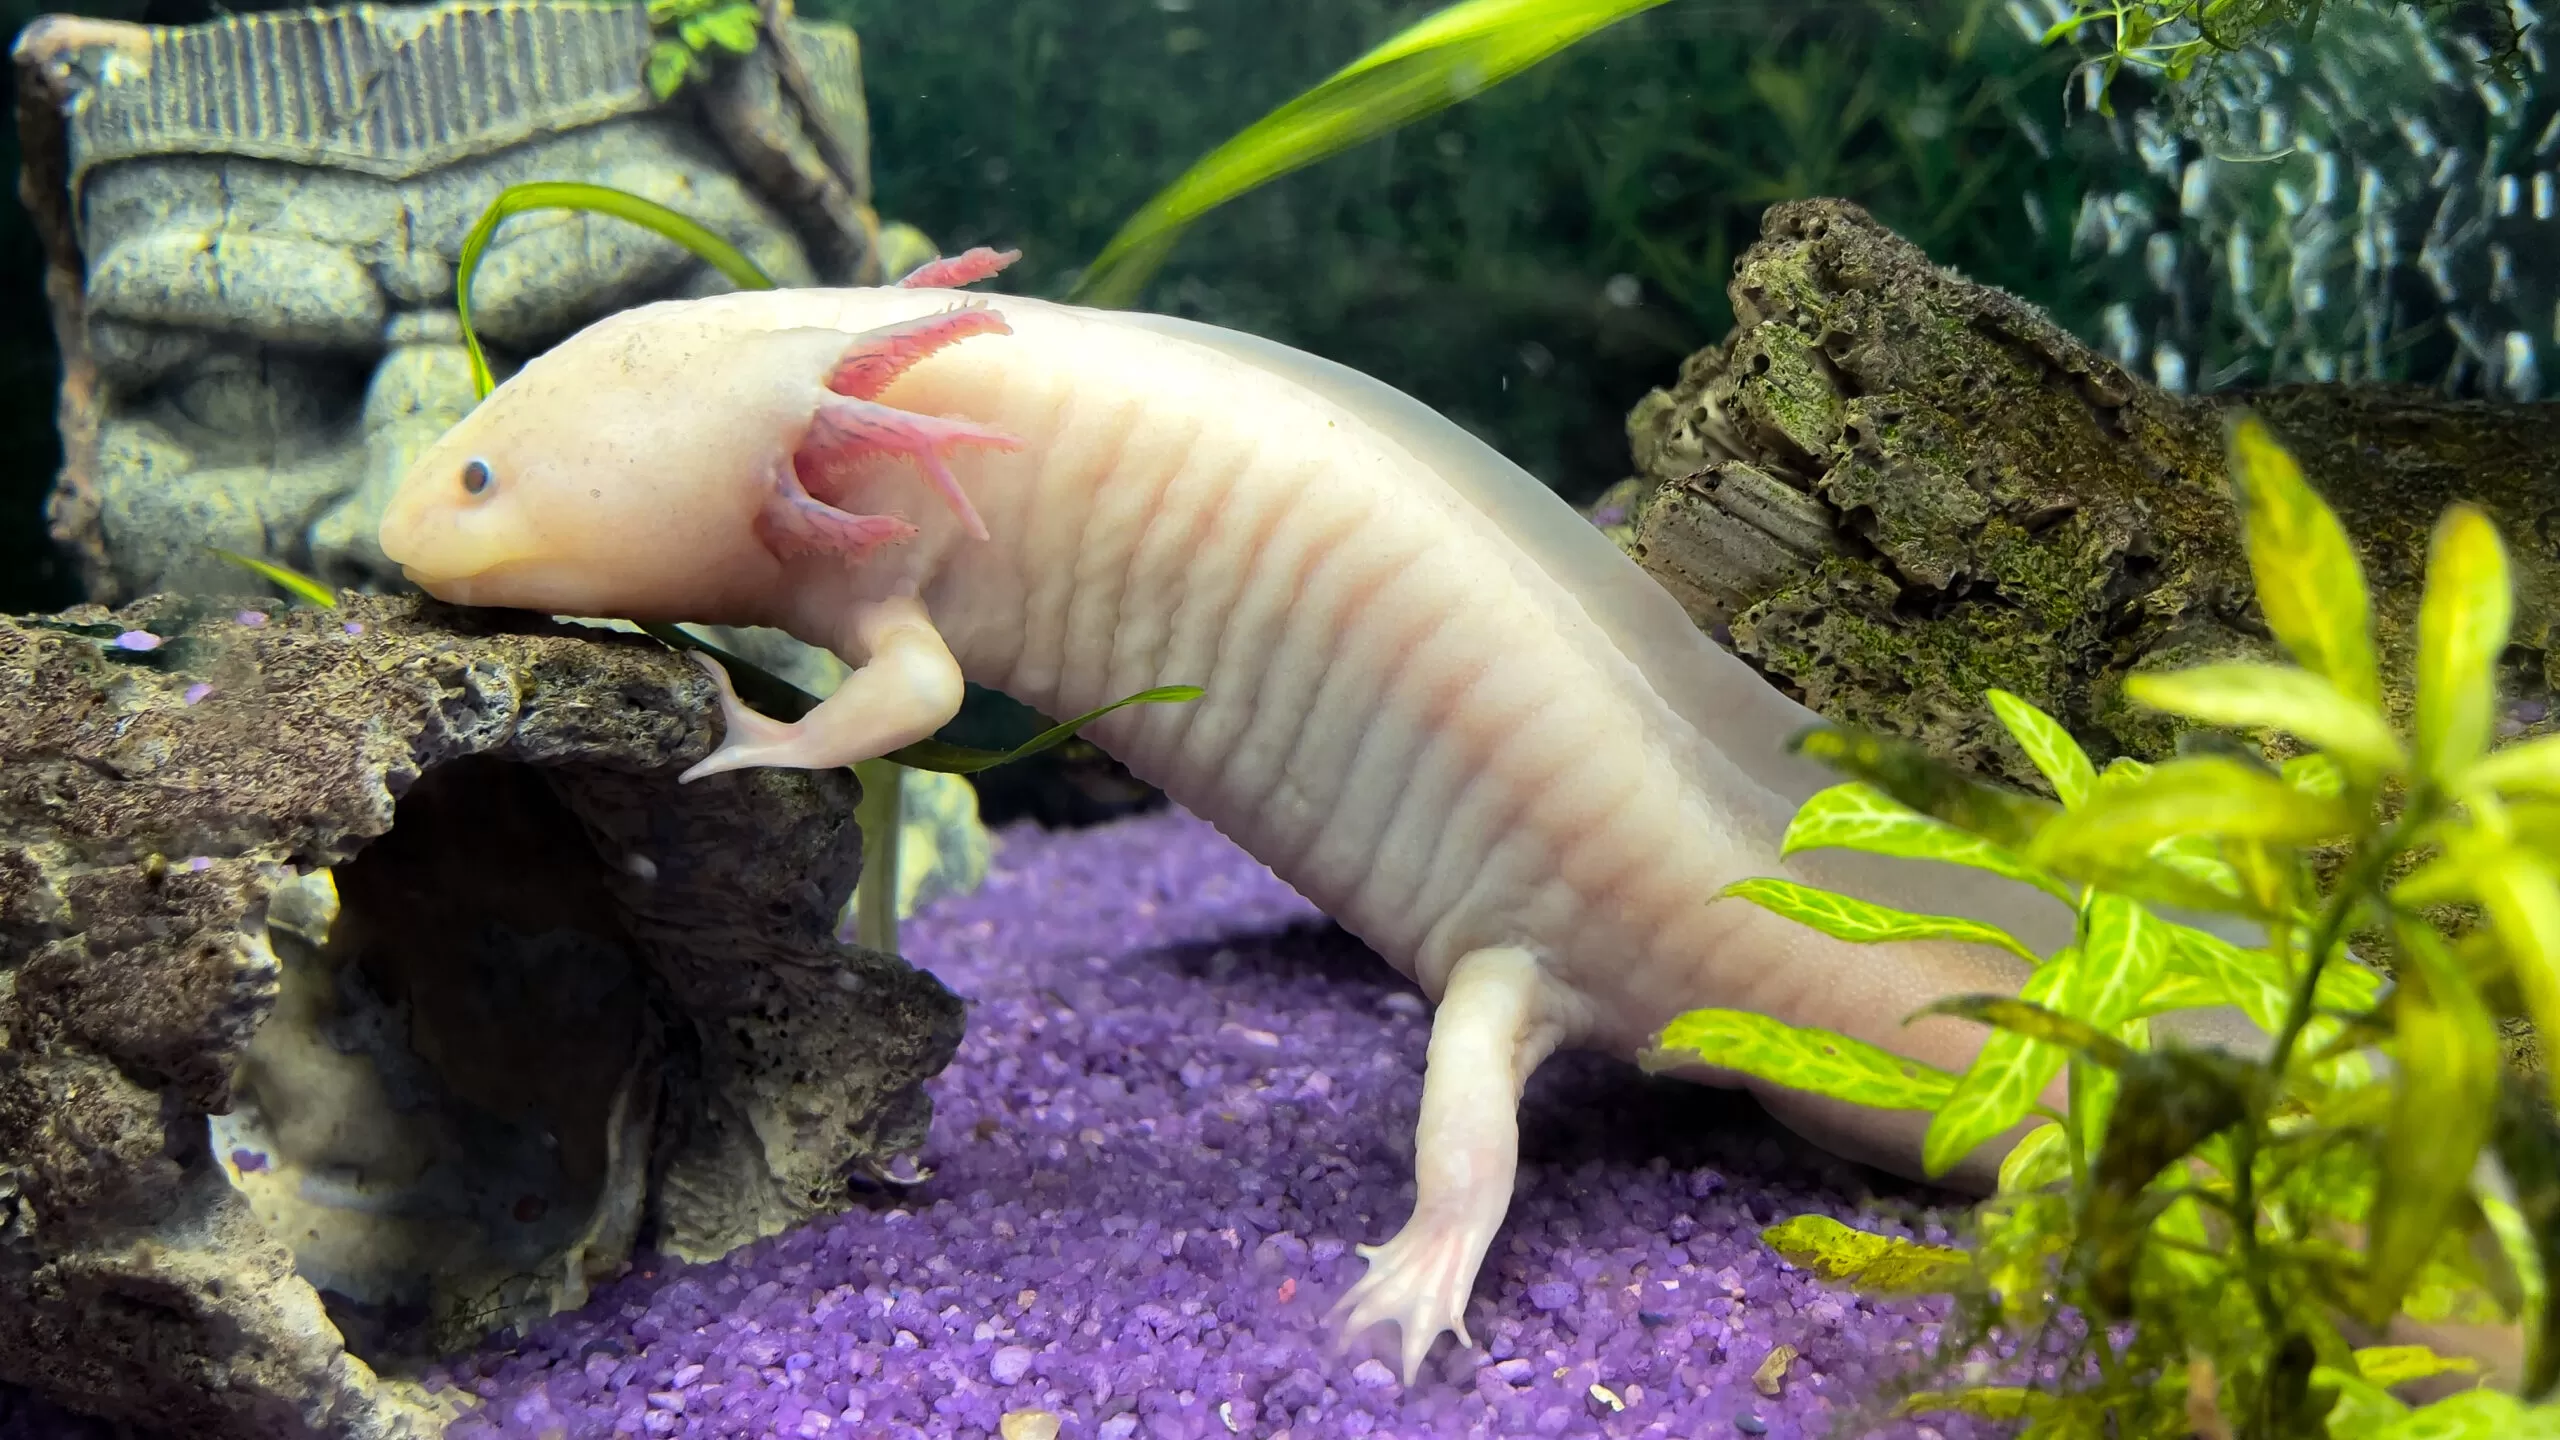 How long do Axolotls live? Axolotl lifespan